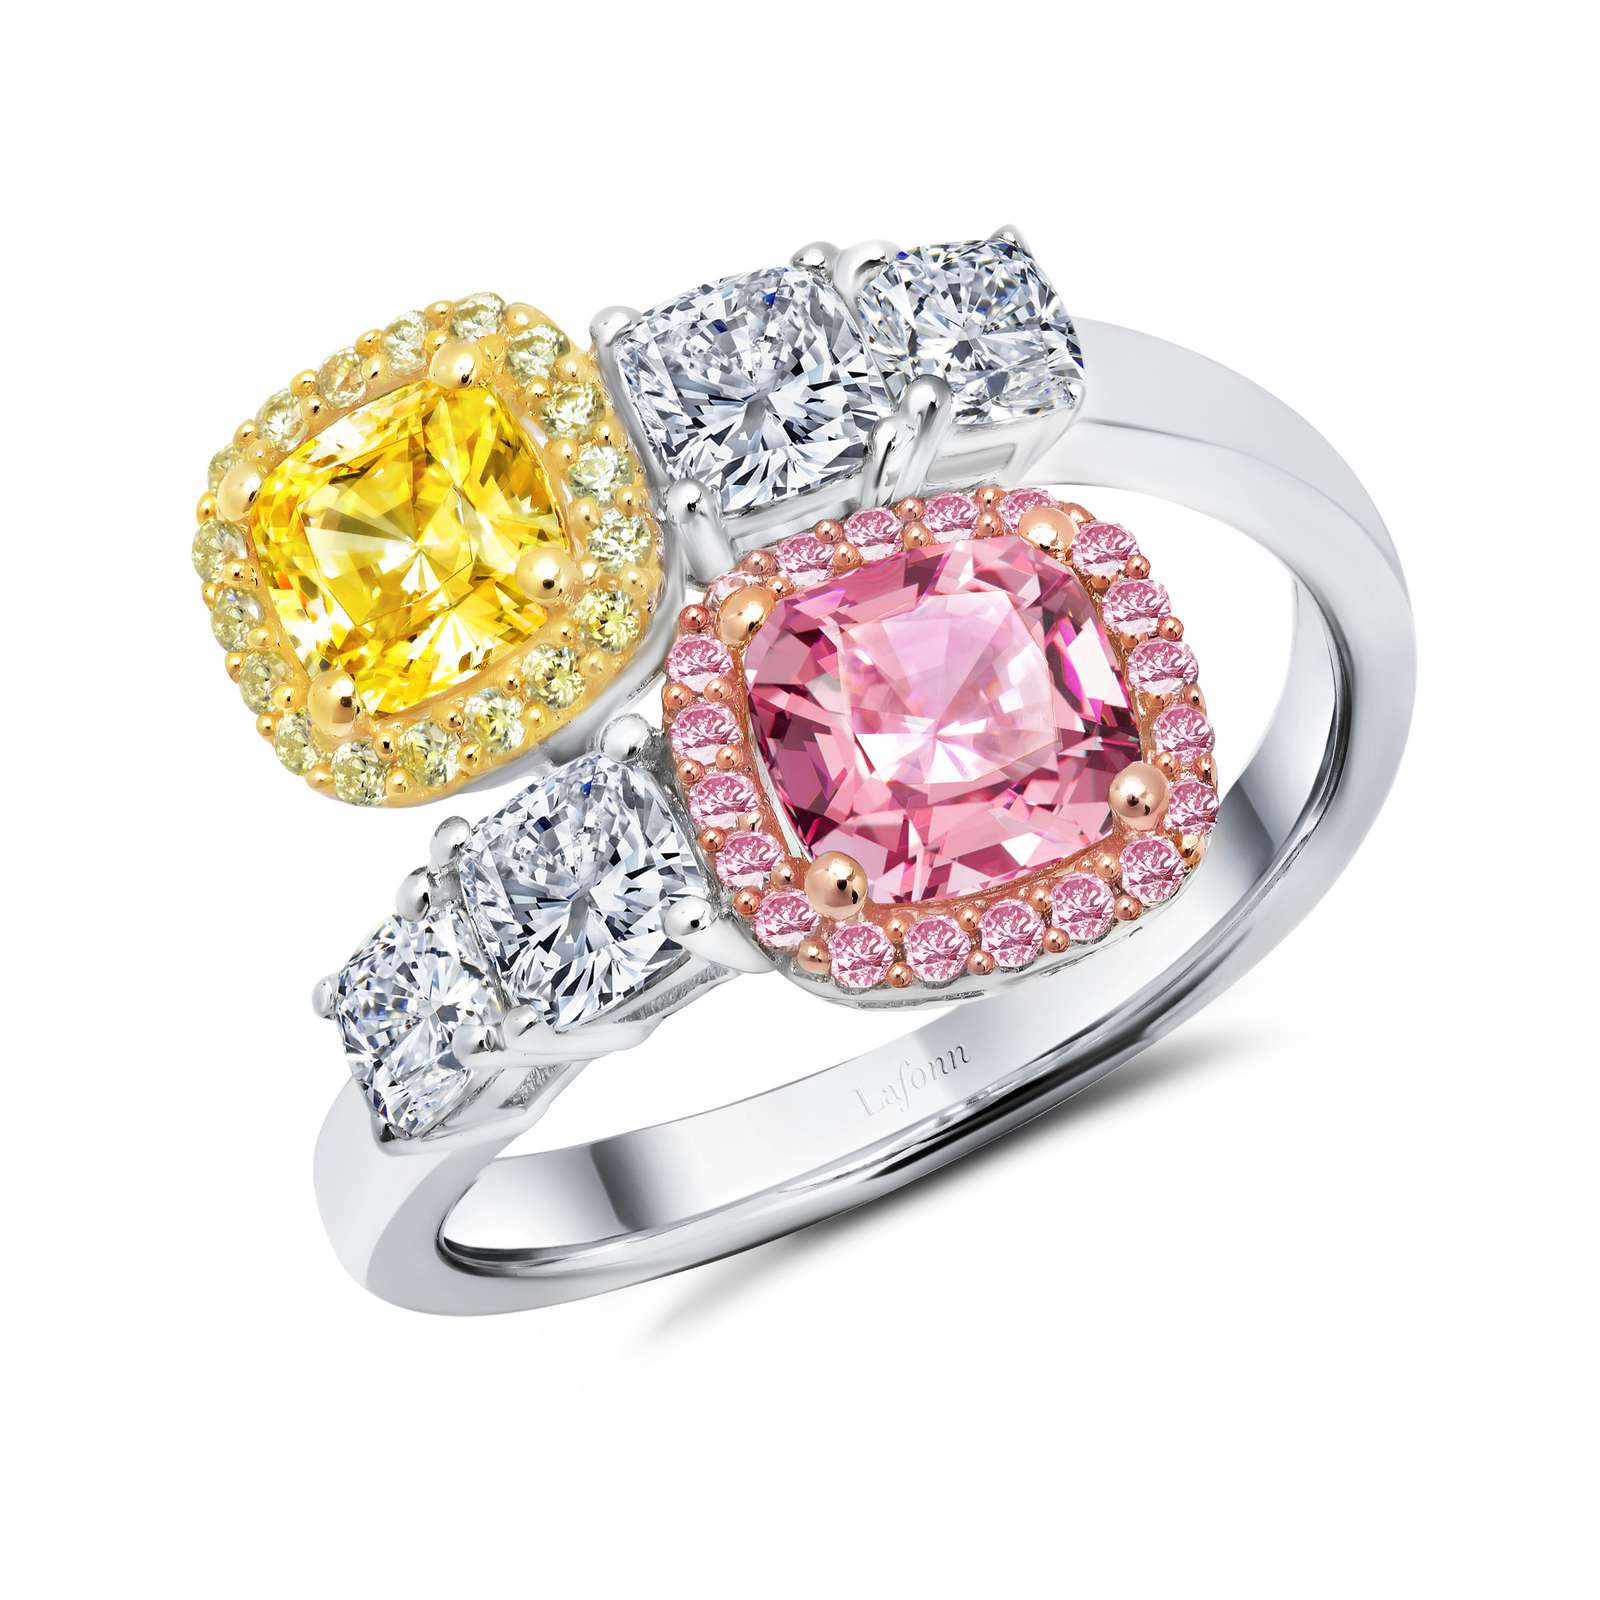 Pink & Yellow Bypass Ring Diamond Shop Ada, OK